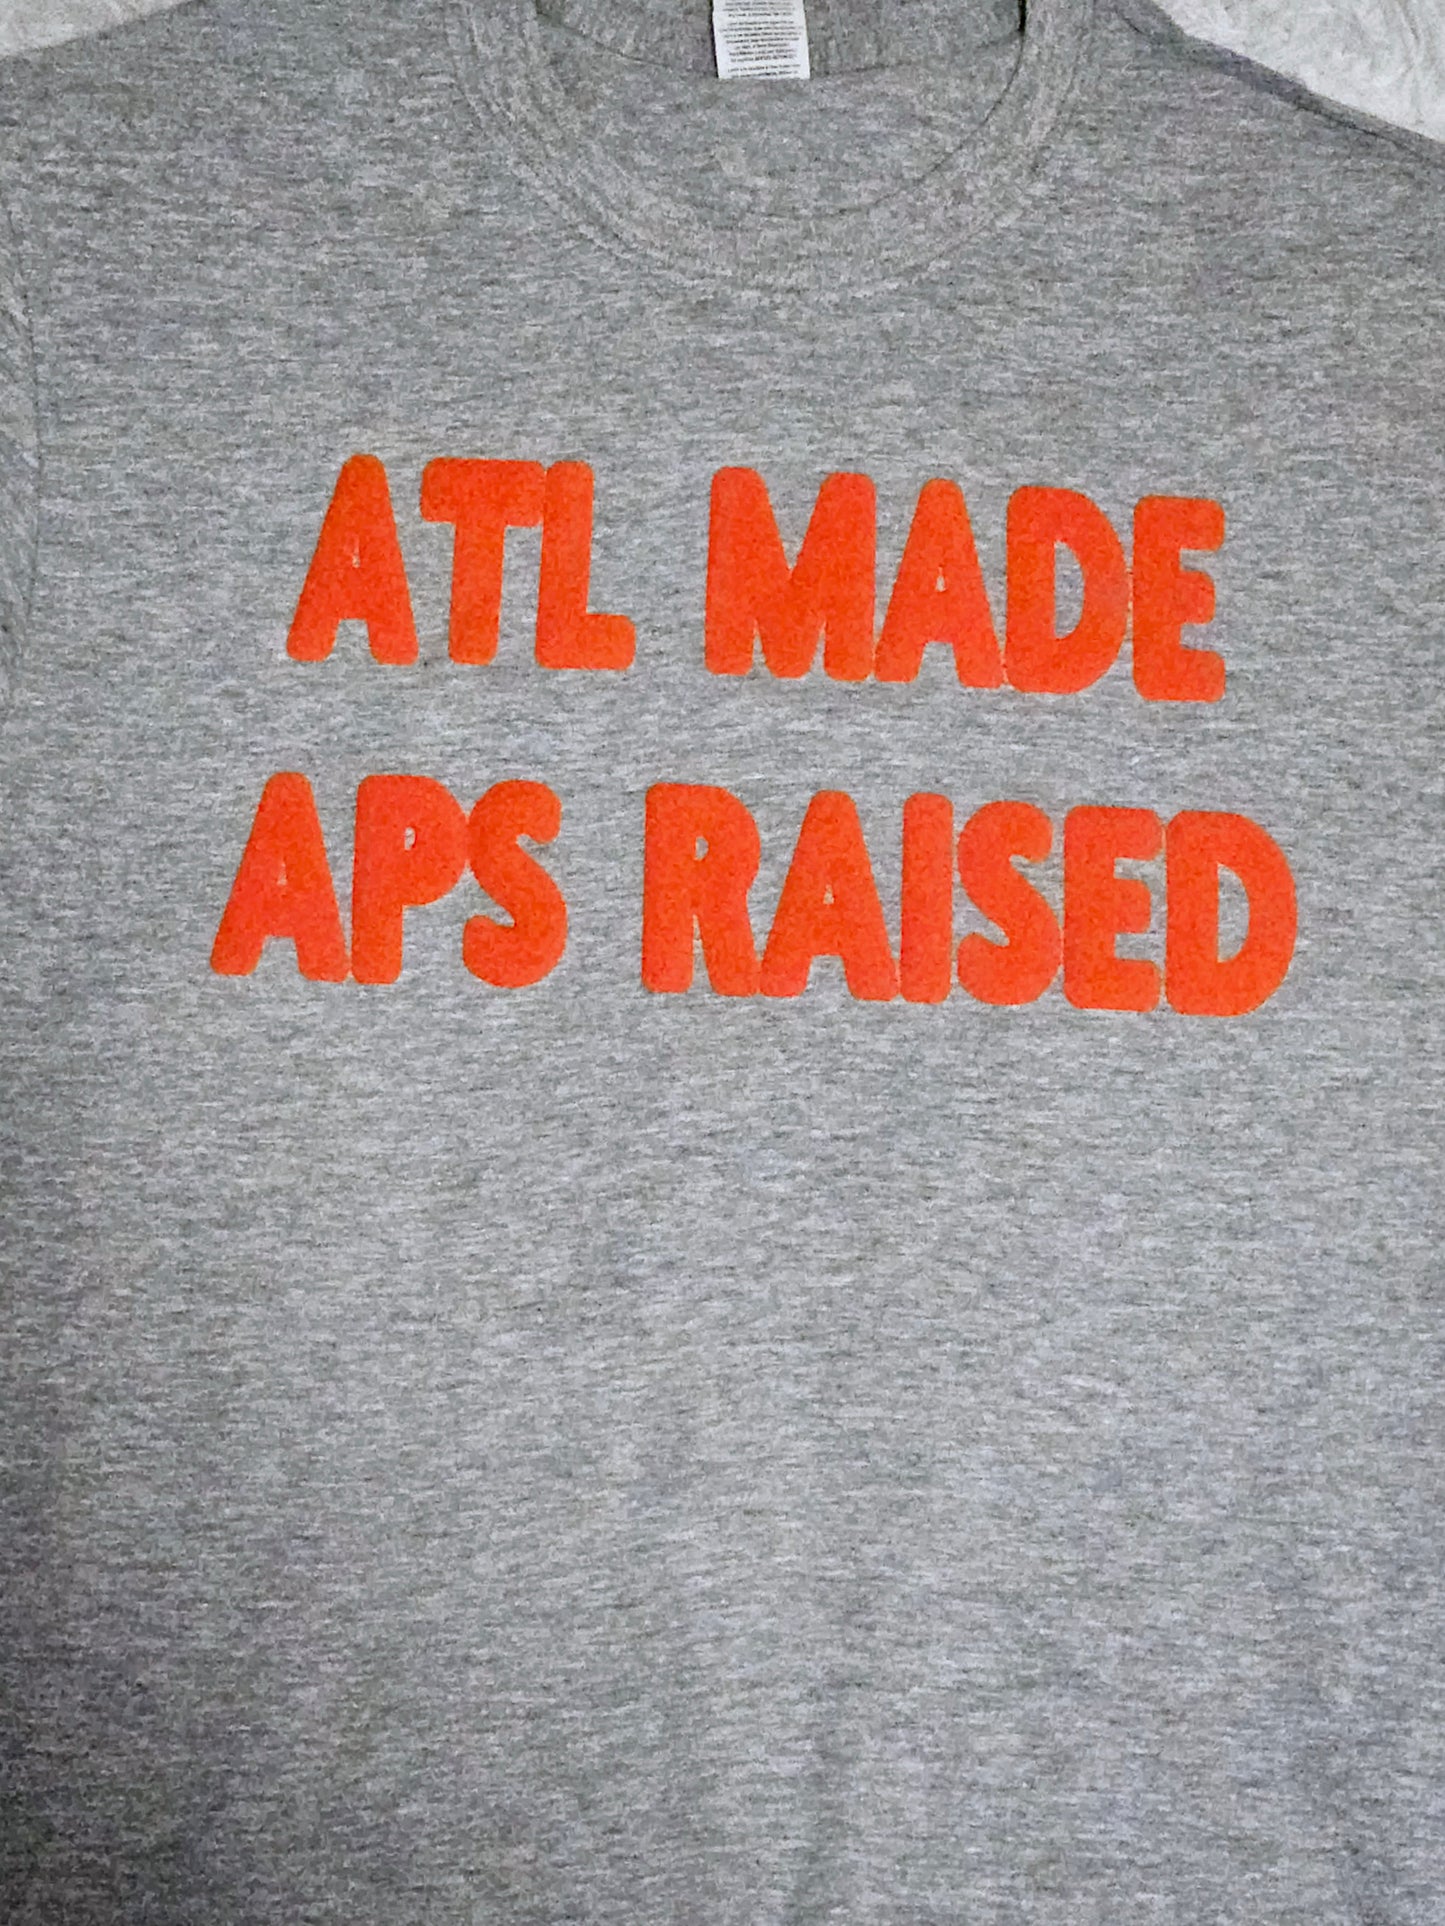 ATL Made, APS Raised